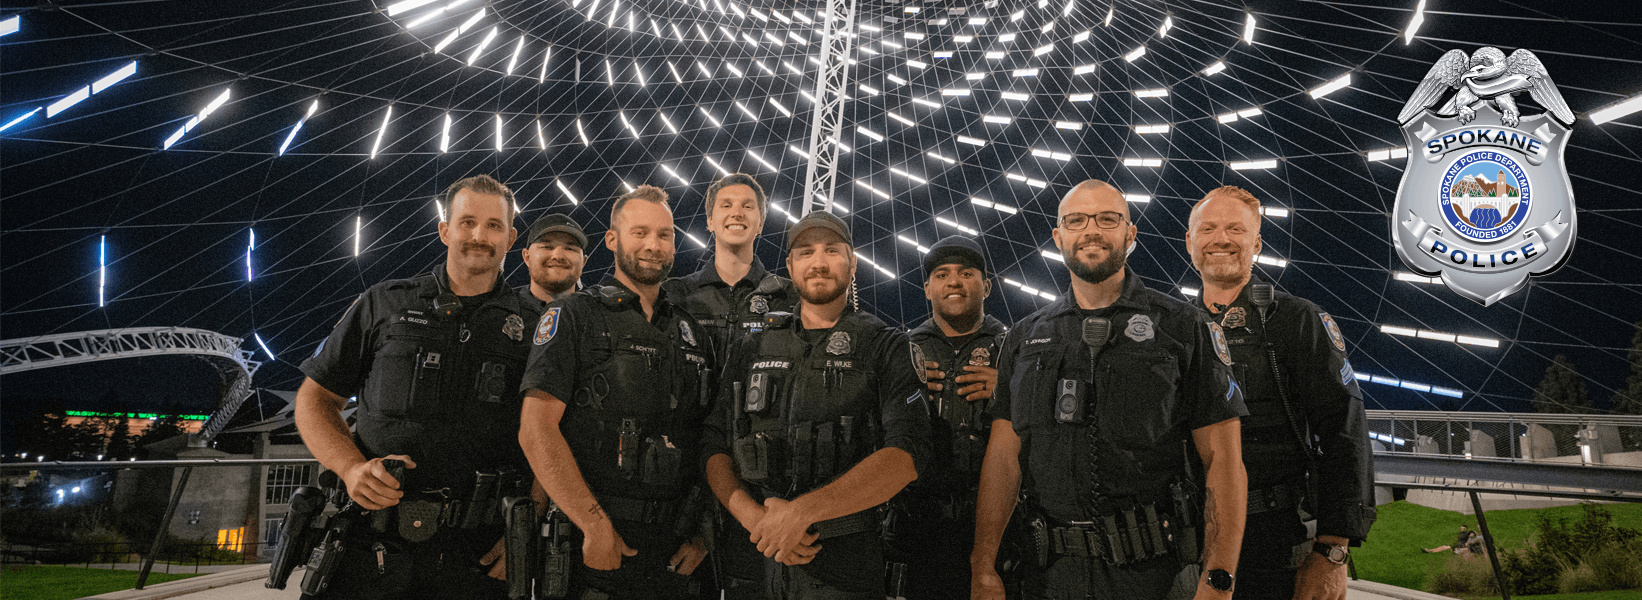 Spokane police department group photo